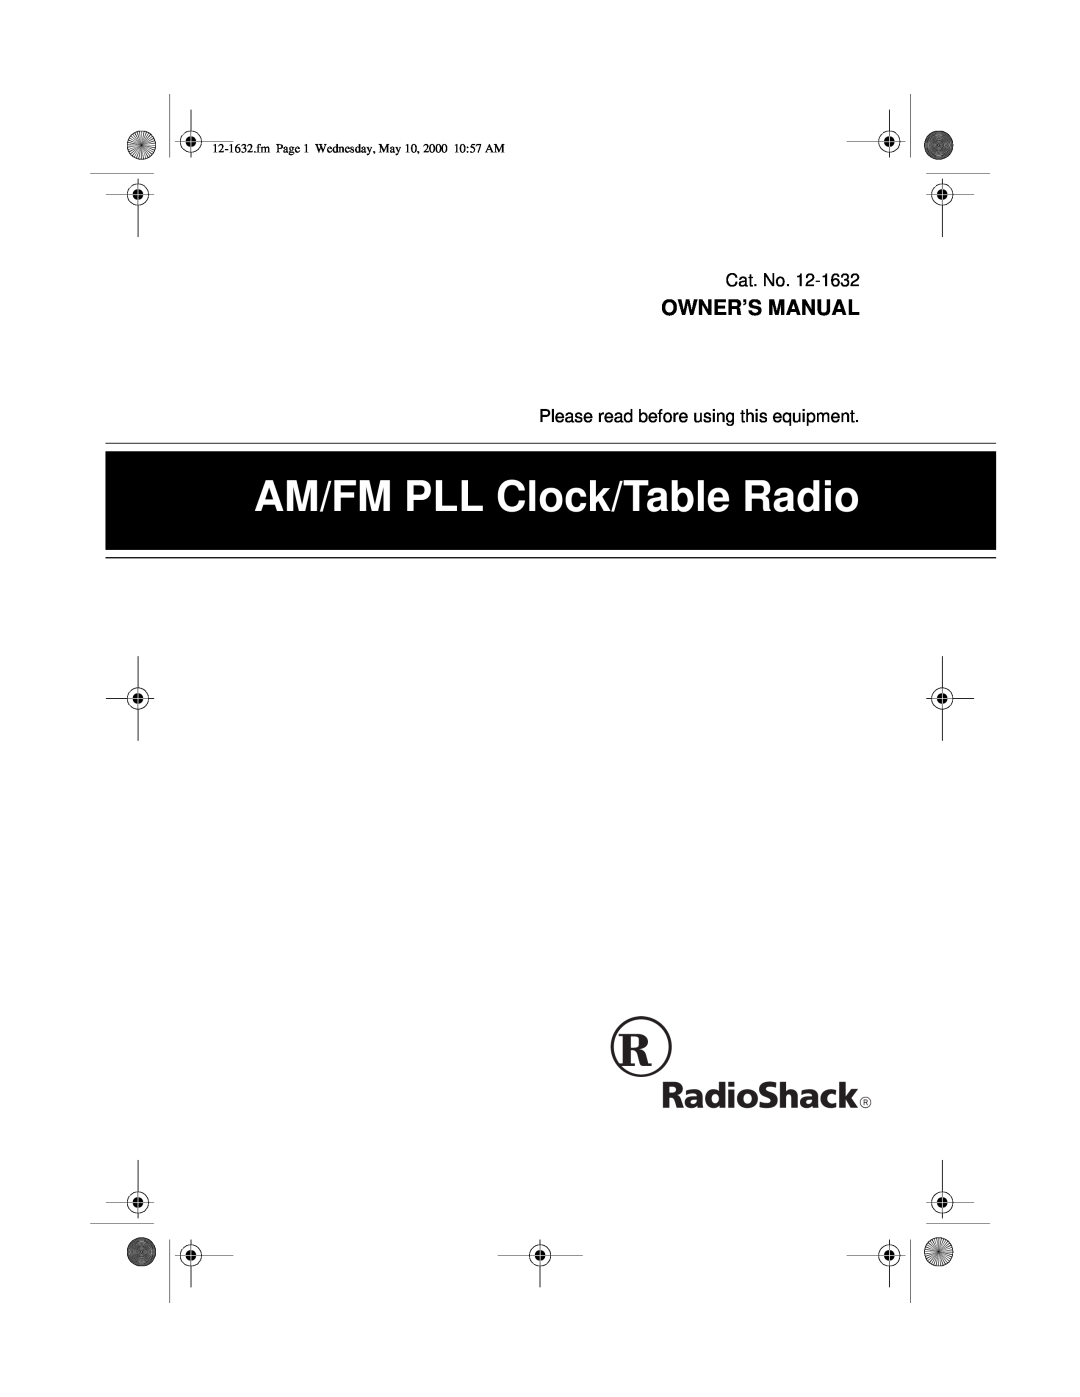 Radio Shack 12-1632 owner manual AM/FM PLL Clock/Table Radio, Owner’S Manual, Cat. No 